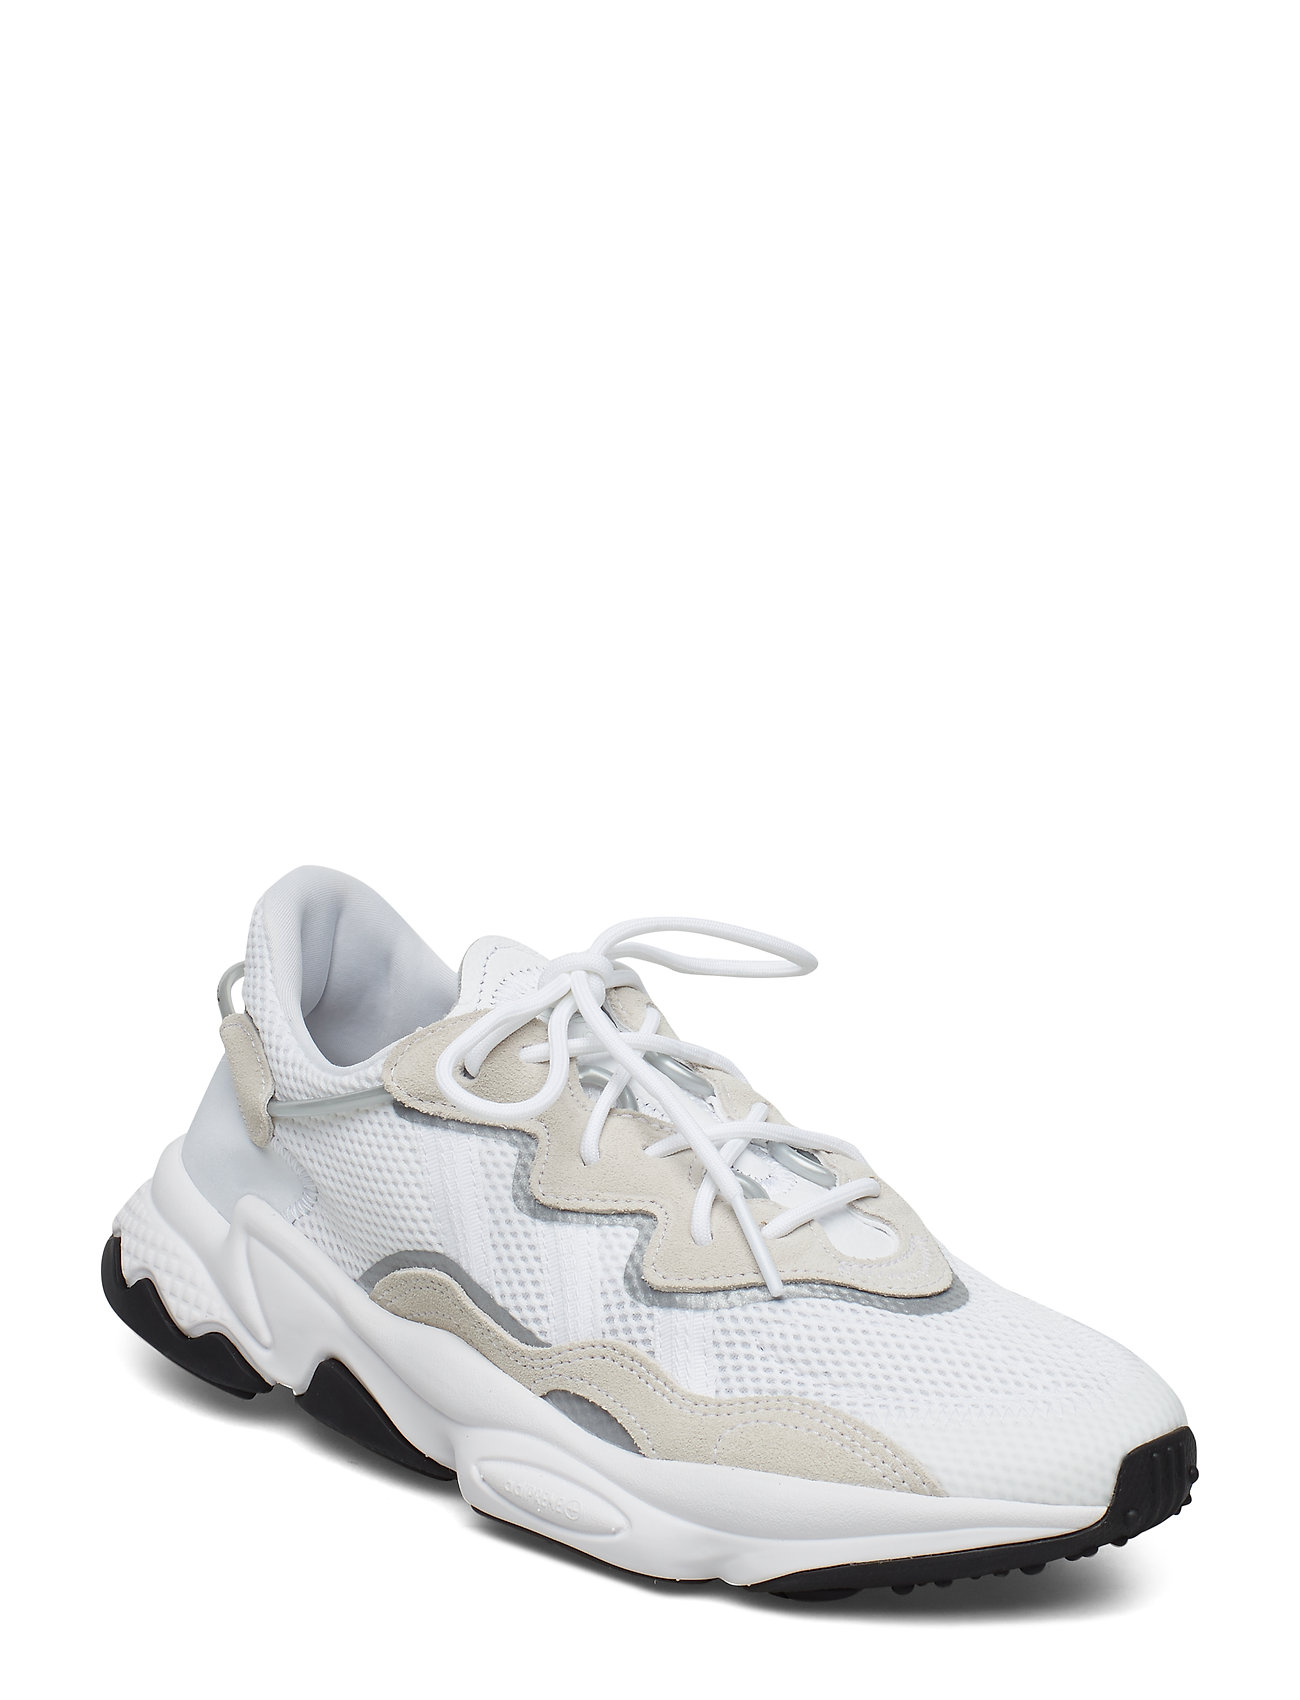 Ozweego Sport Sneakers Low-top Sneakers White Adidas Originals